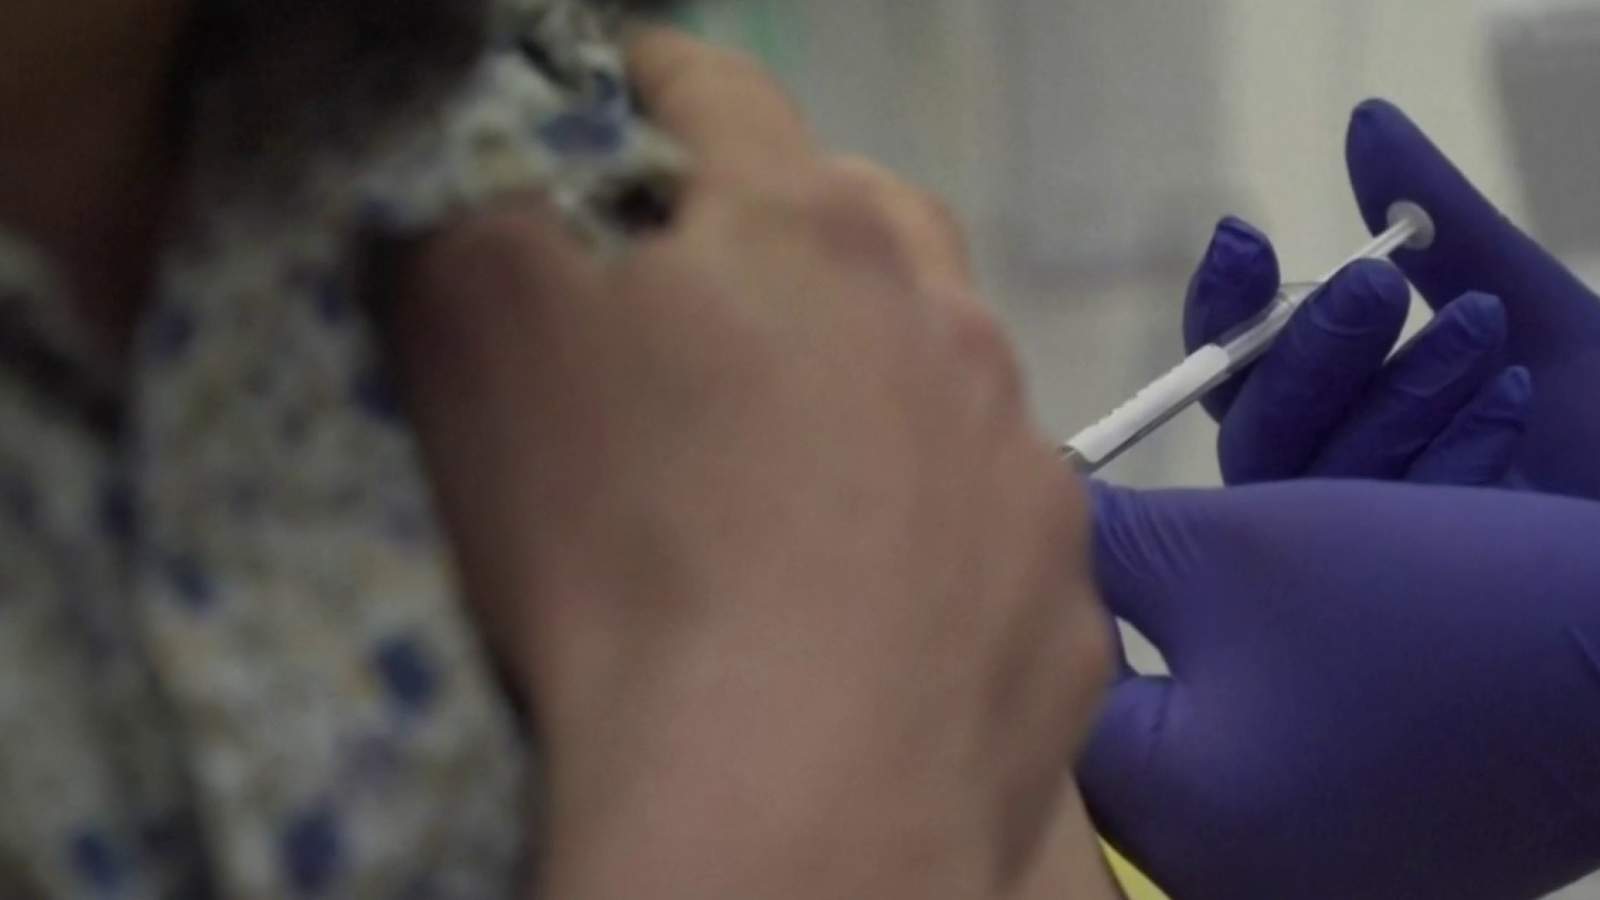 Oxford-AstraZeneca vaccine appears to reduce coronavirus spread